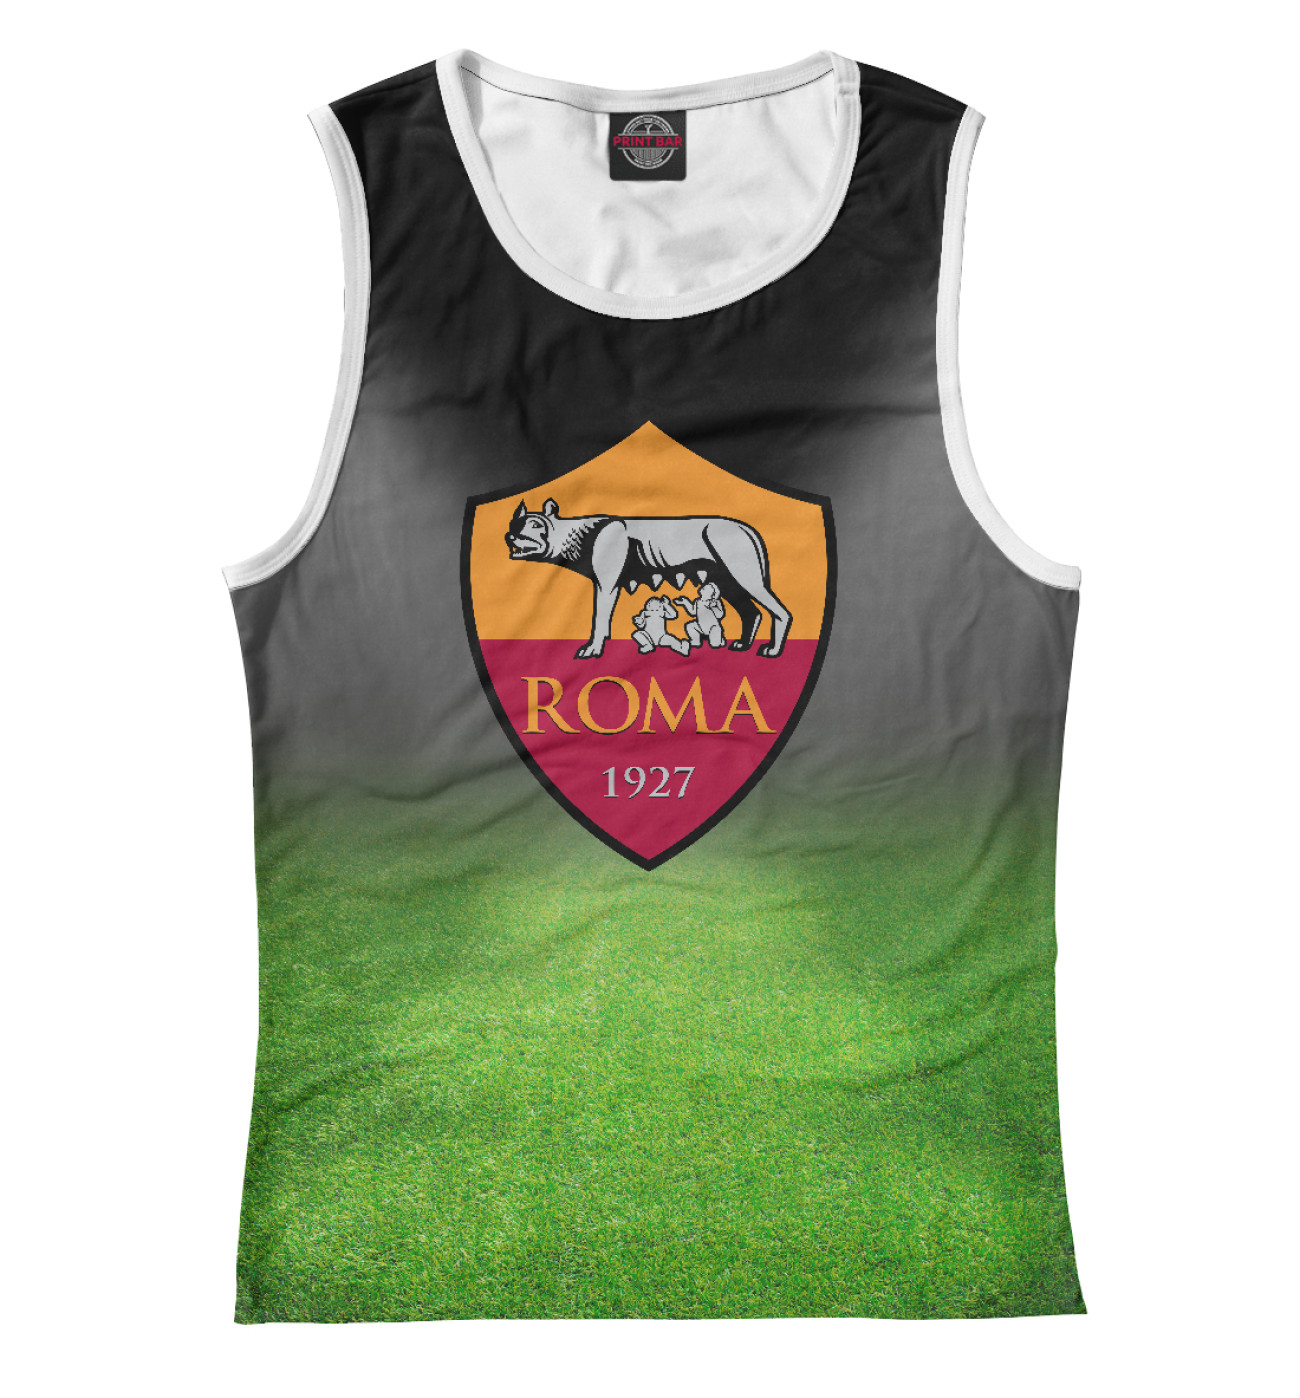 Женская Майка FC Roma, артикул: FTO-472047-may-1